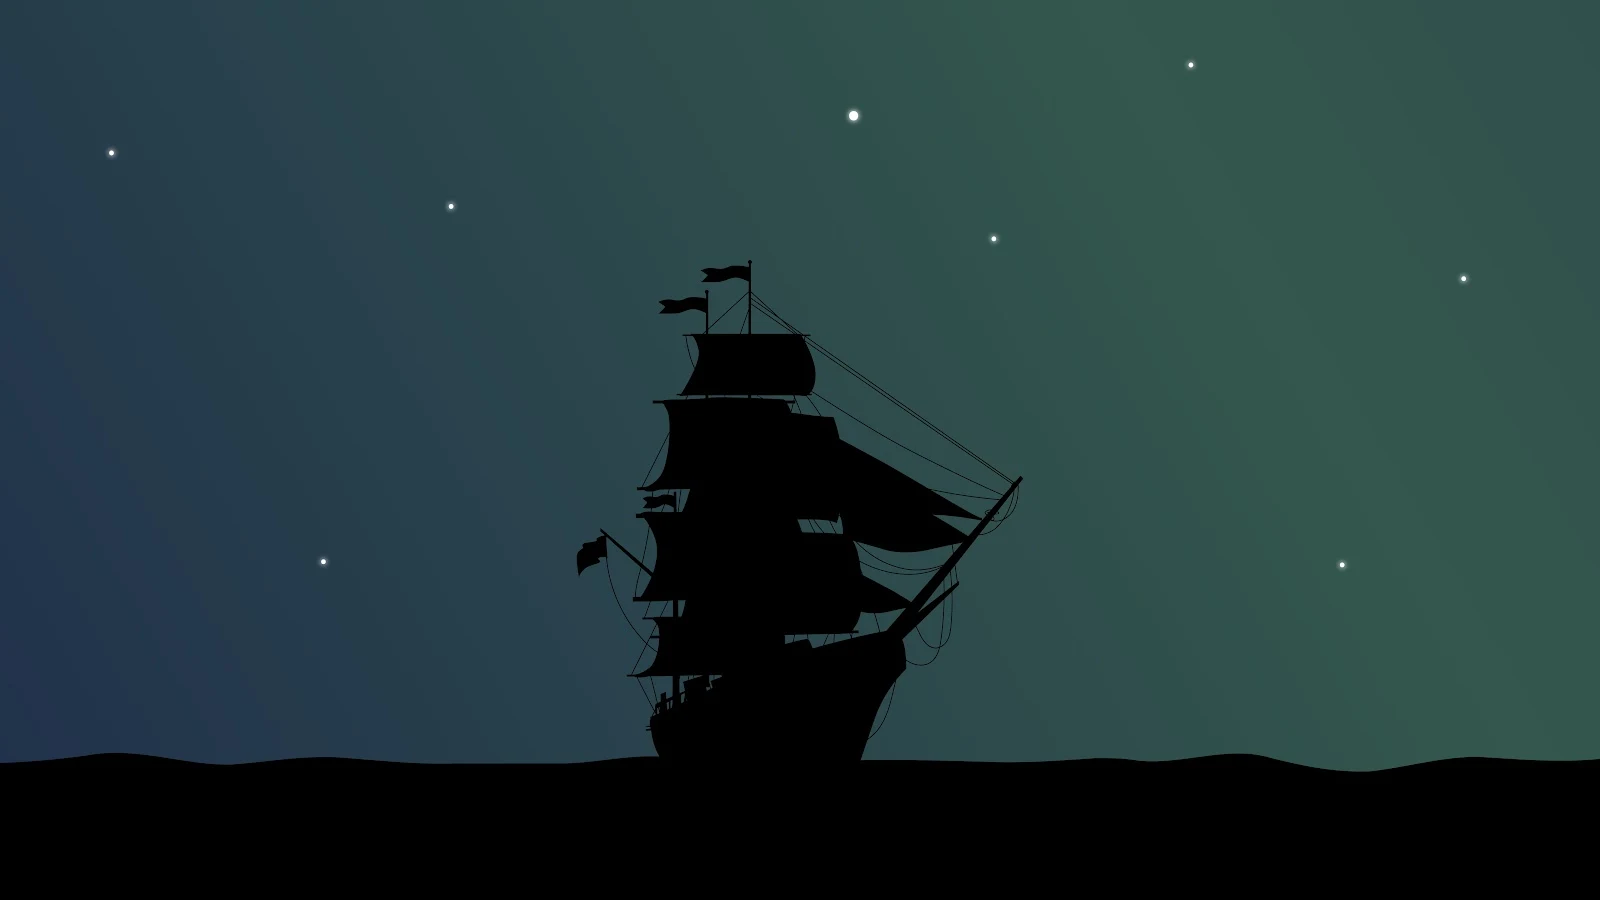 Artwork, Minimalism, Stars, Night, Pirate Ship 8K Desktop, iPhone Wallpaper Background